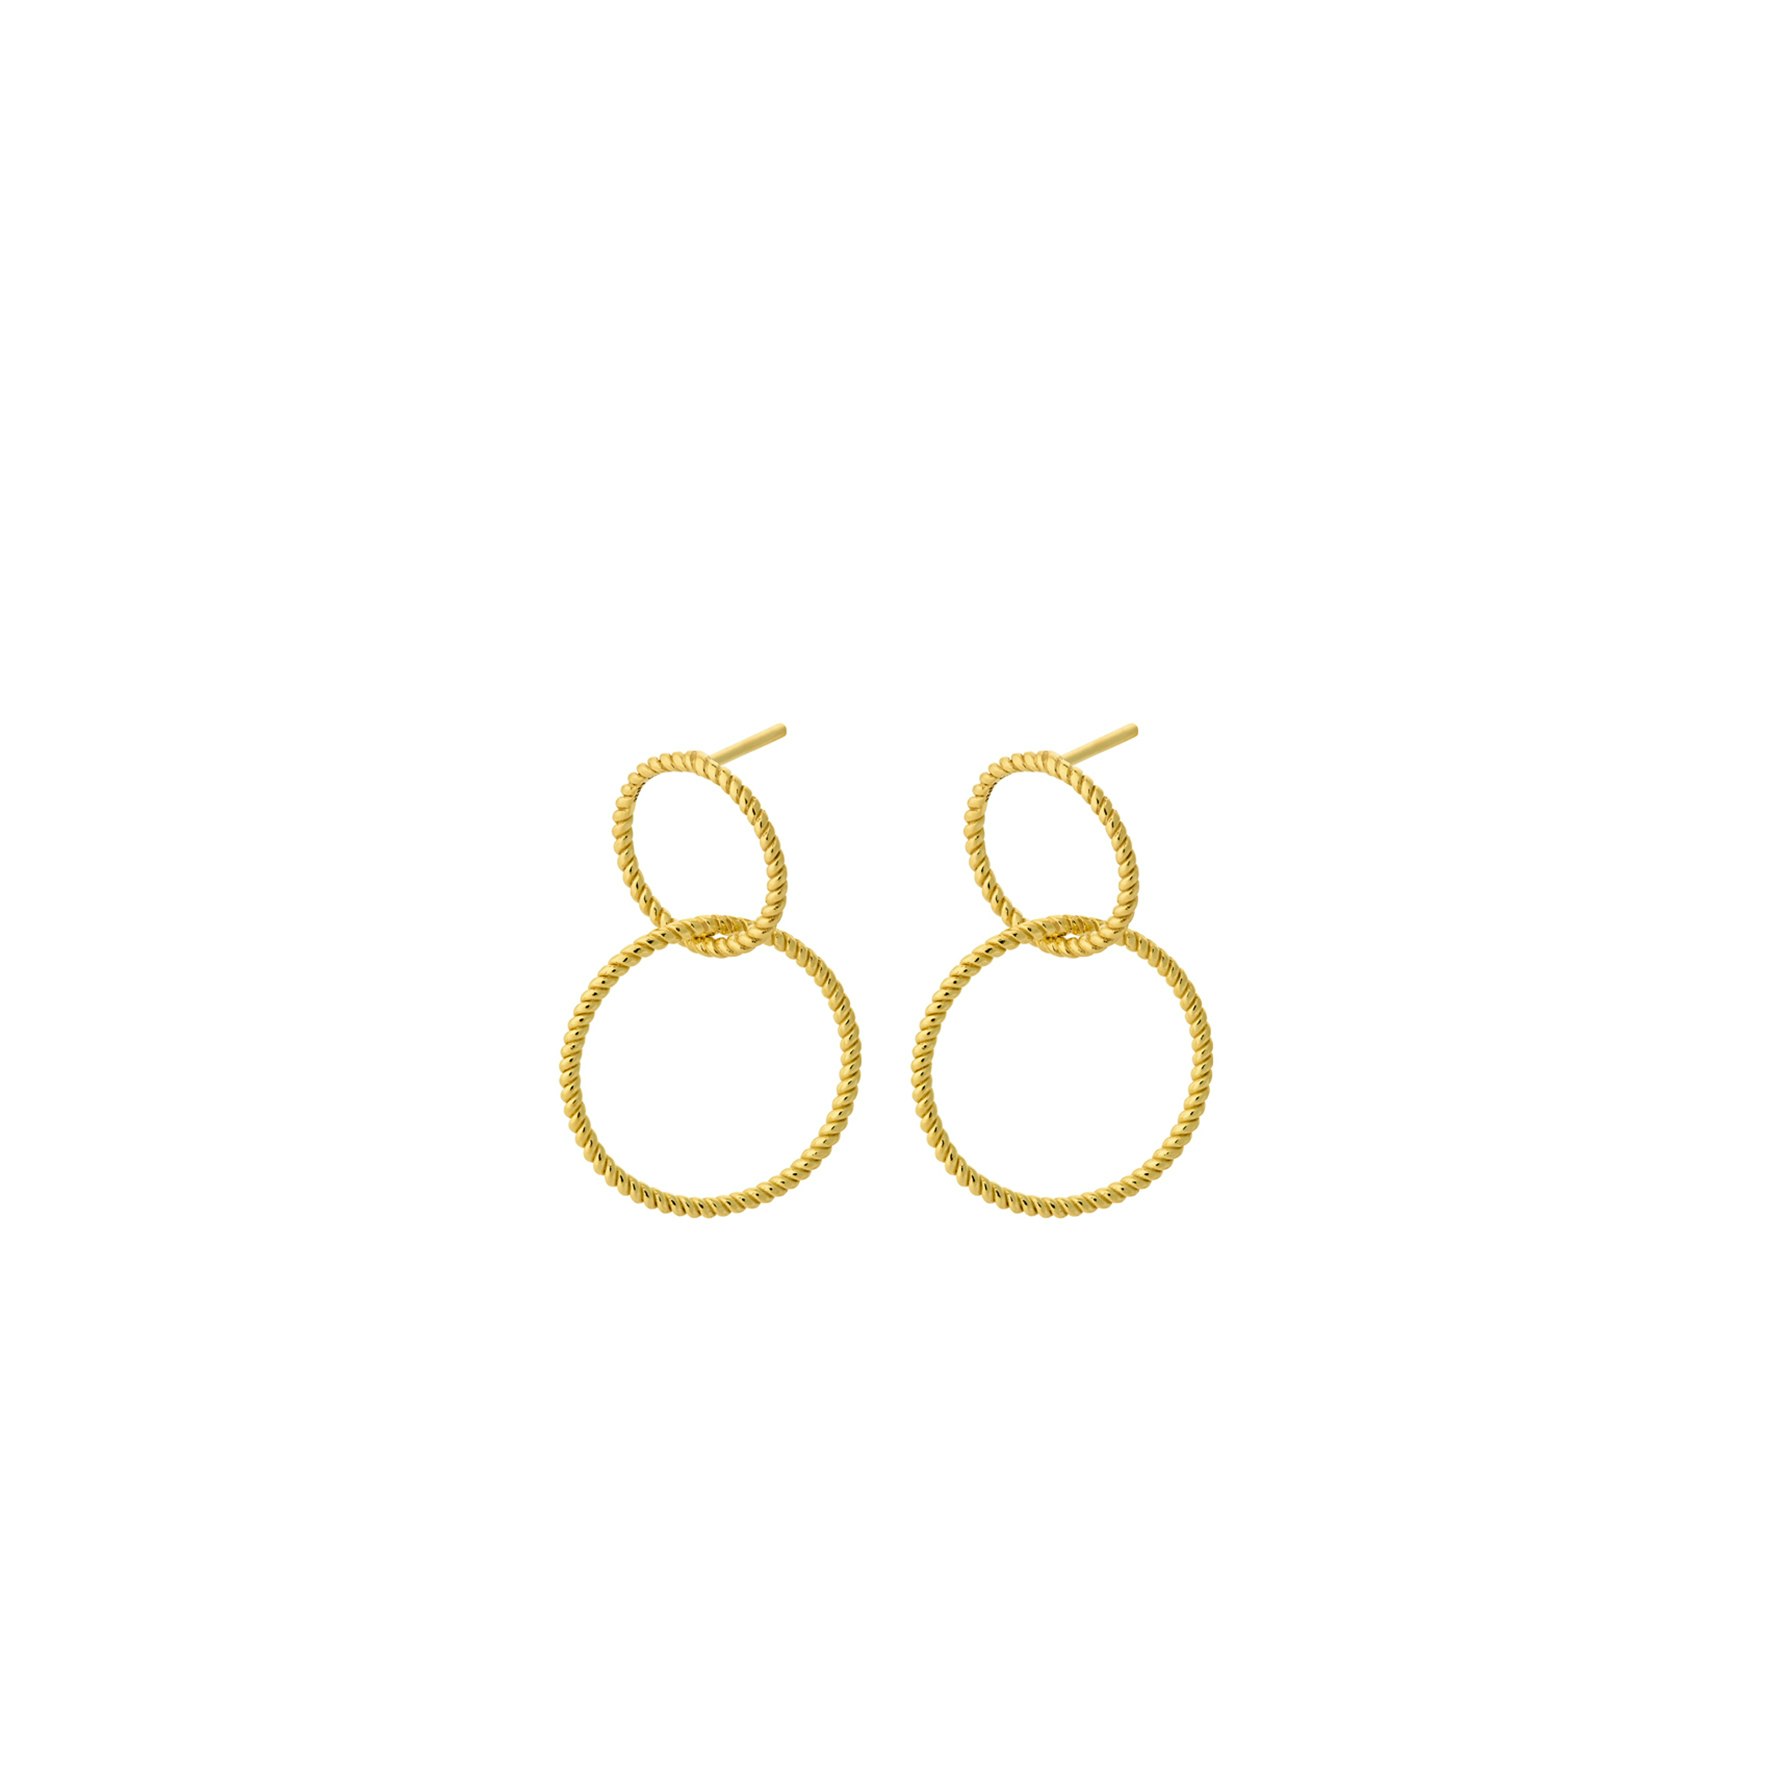 Double Twisted Earrings von Pernille Corydon in Vergoldet-Silber Sterling 925